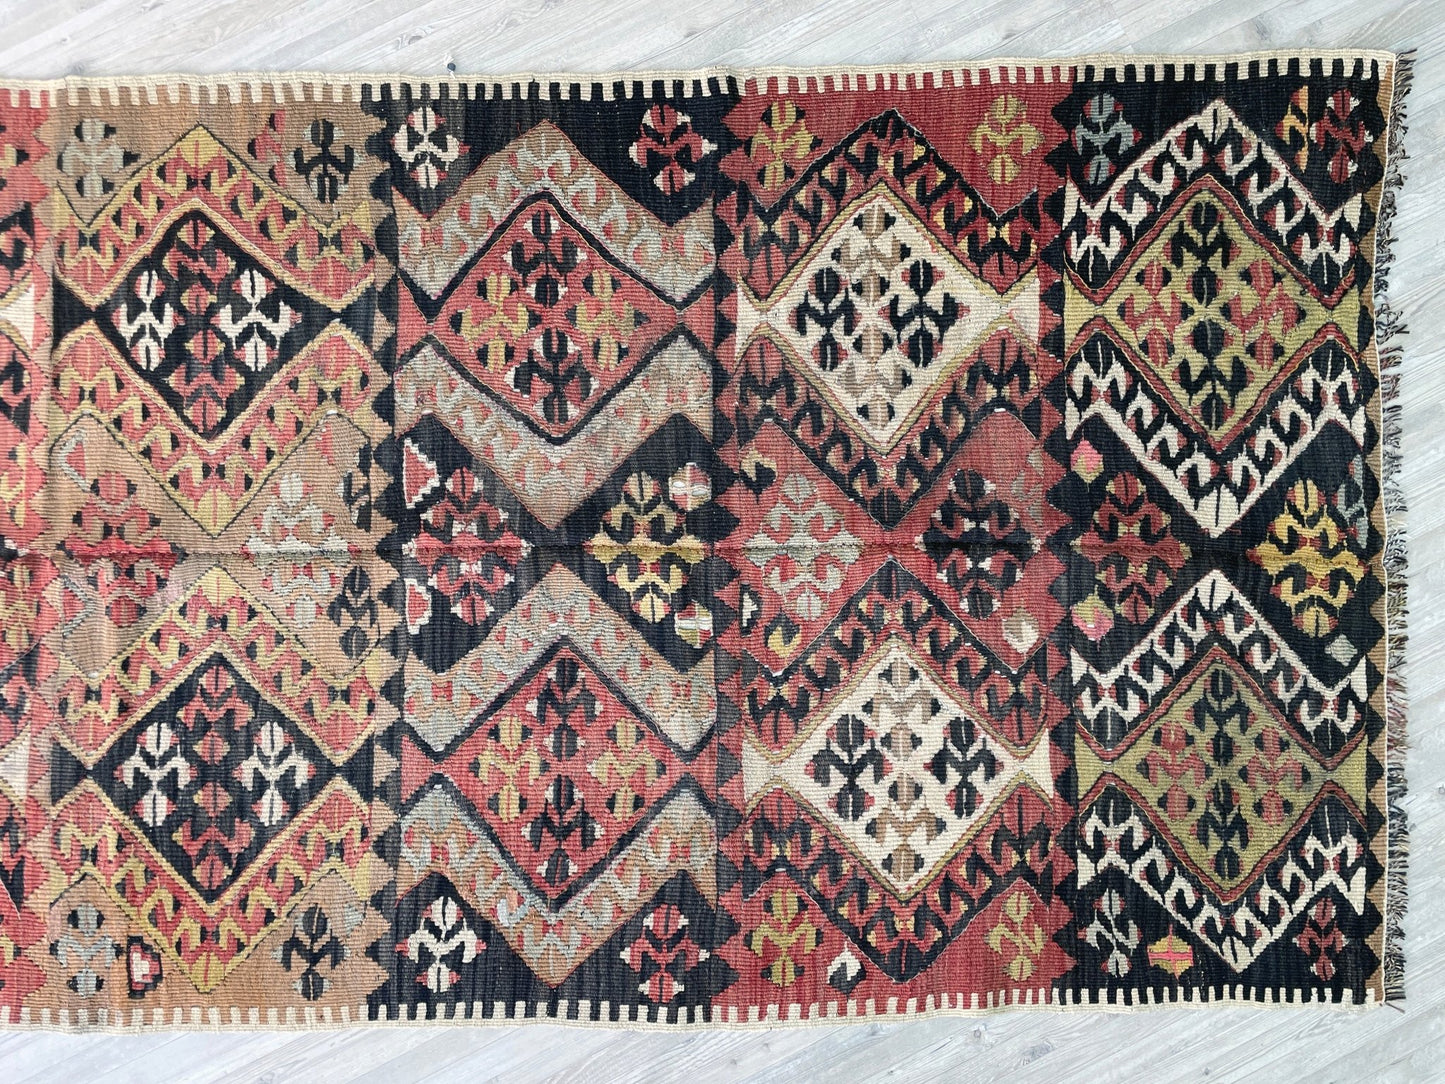 Kayseri turkish kilim rug shop san francisco bay area. Buy handmade wool vintage rug online